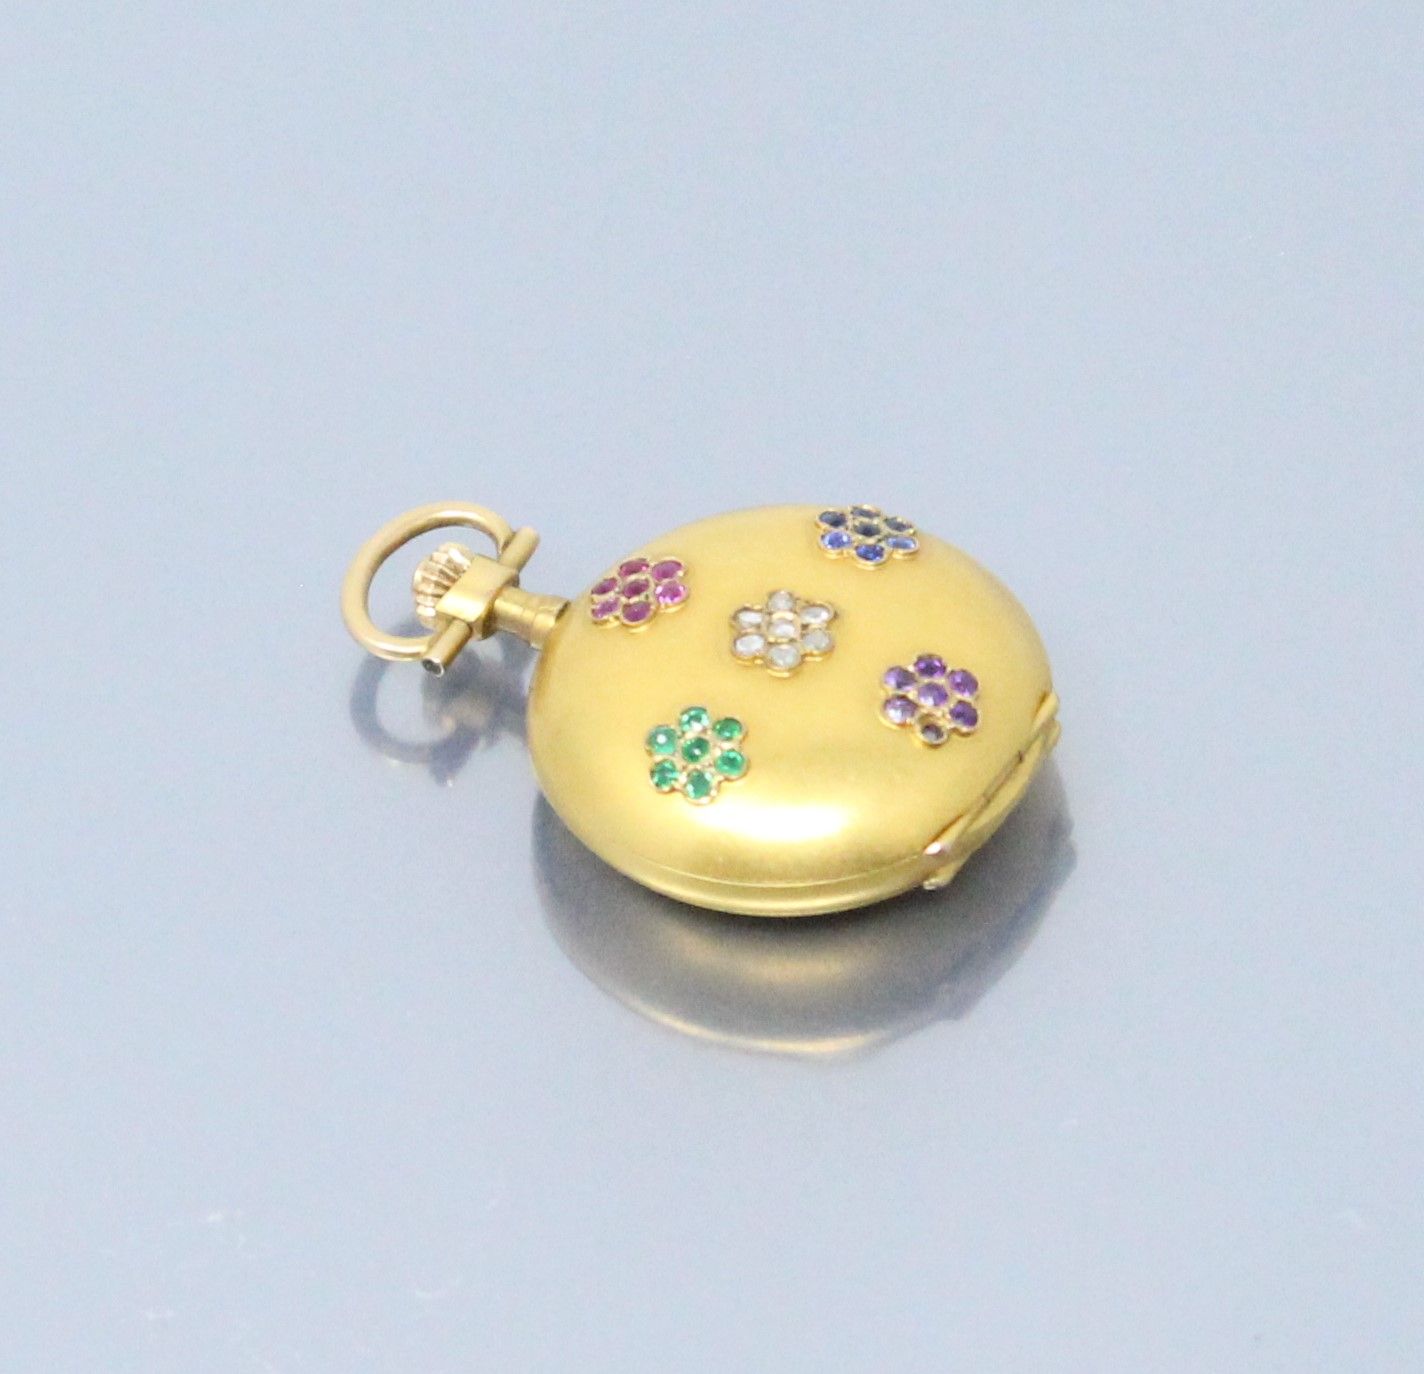 Null 14K（585）黄金领表，白色表盘和蓝色阿拉伯数字。表壳上有花纹和贵重、精美和合成宝石的装饰。

直径：25毫米。- 毛重：19.67克。

(正在运&hellip;